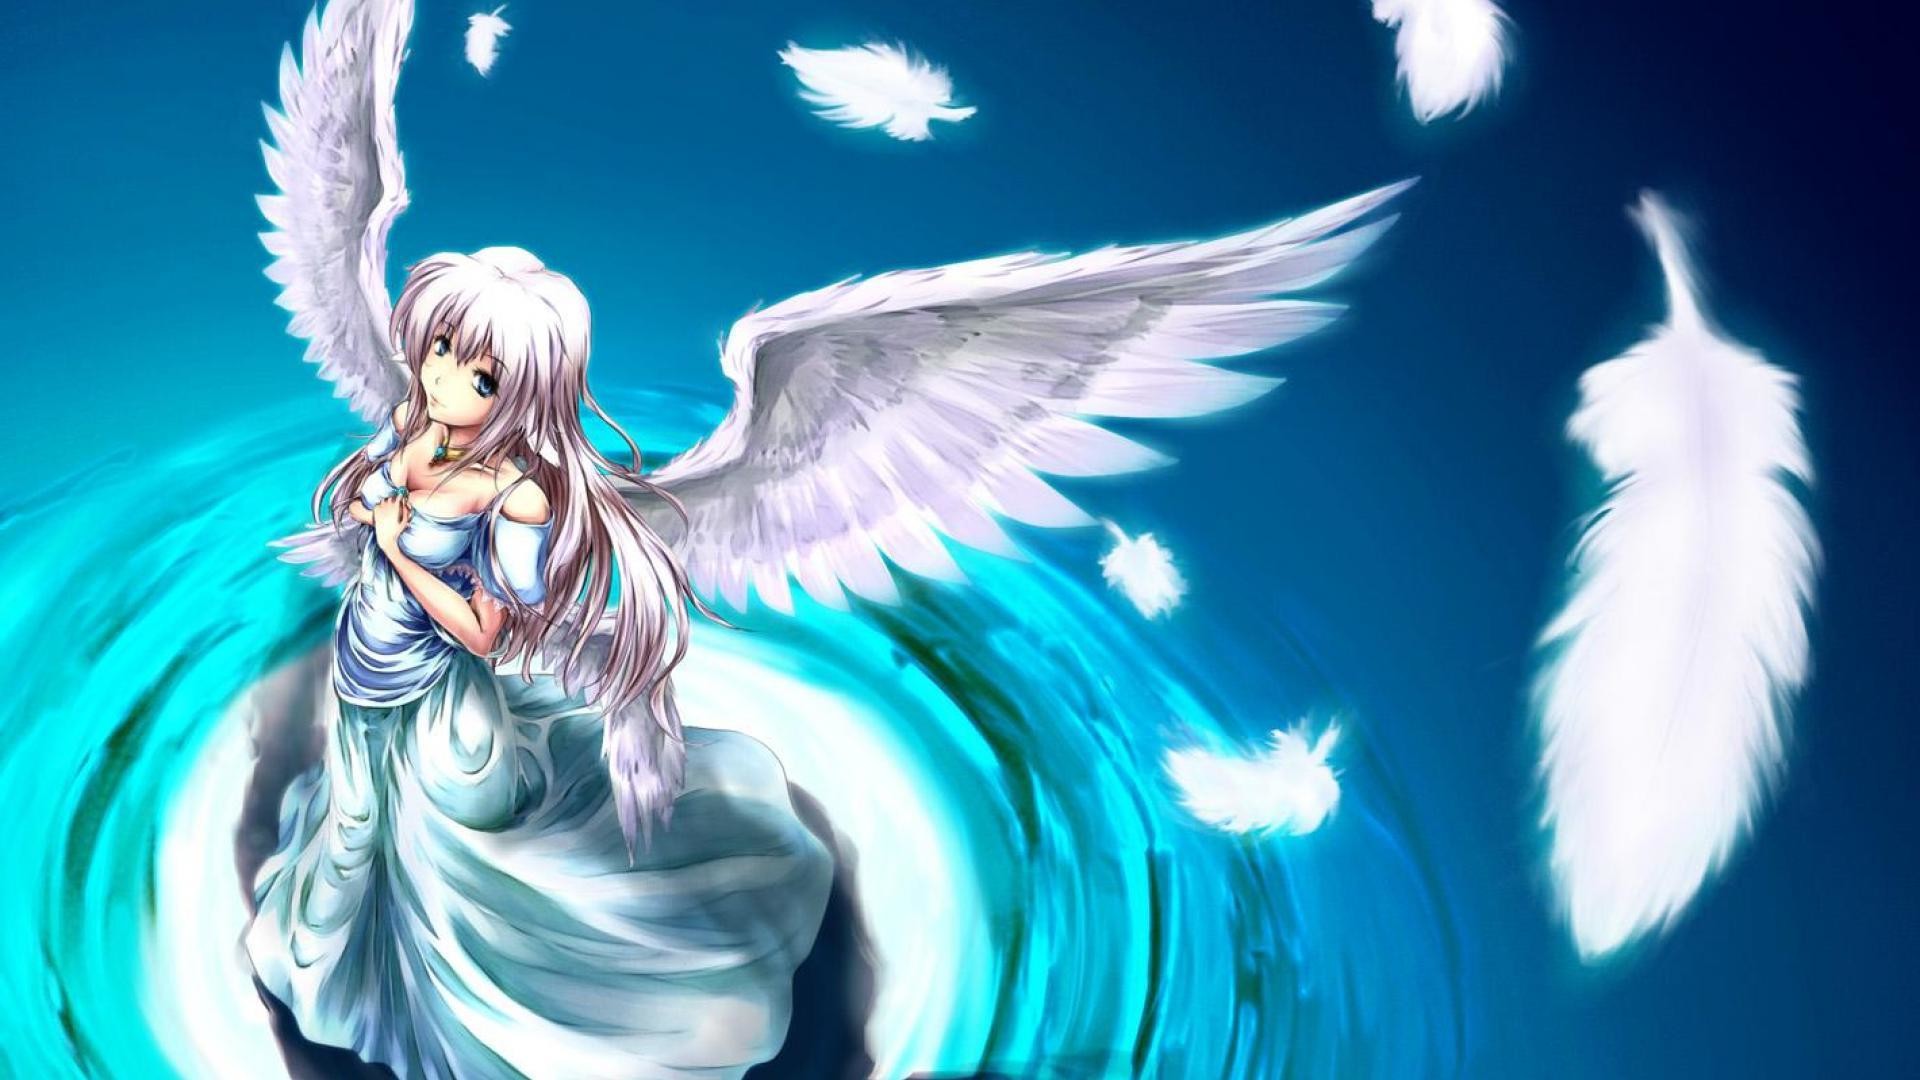 1920x1080 ... Anime Angel wings Wallpaper Download Free